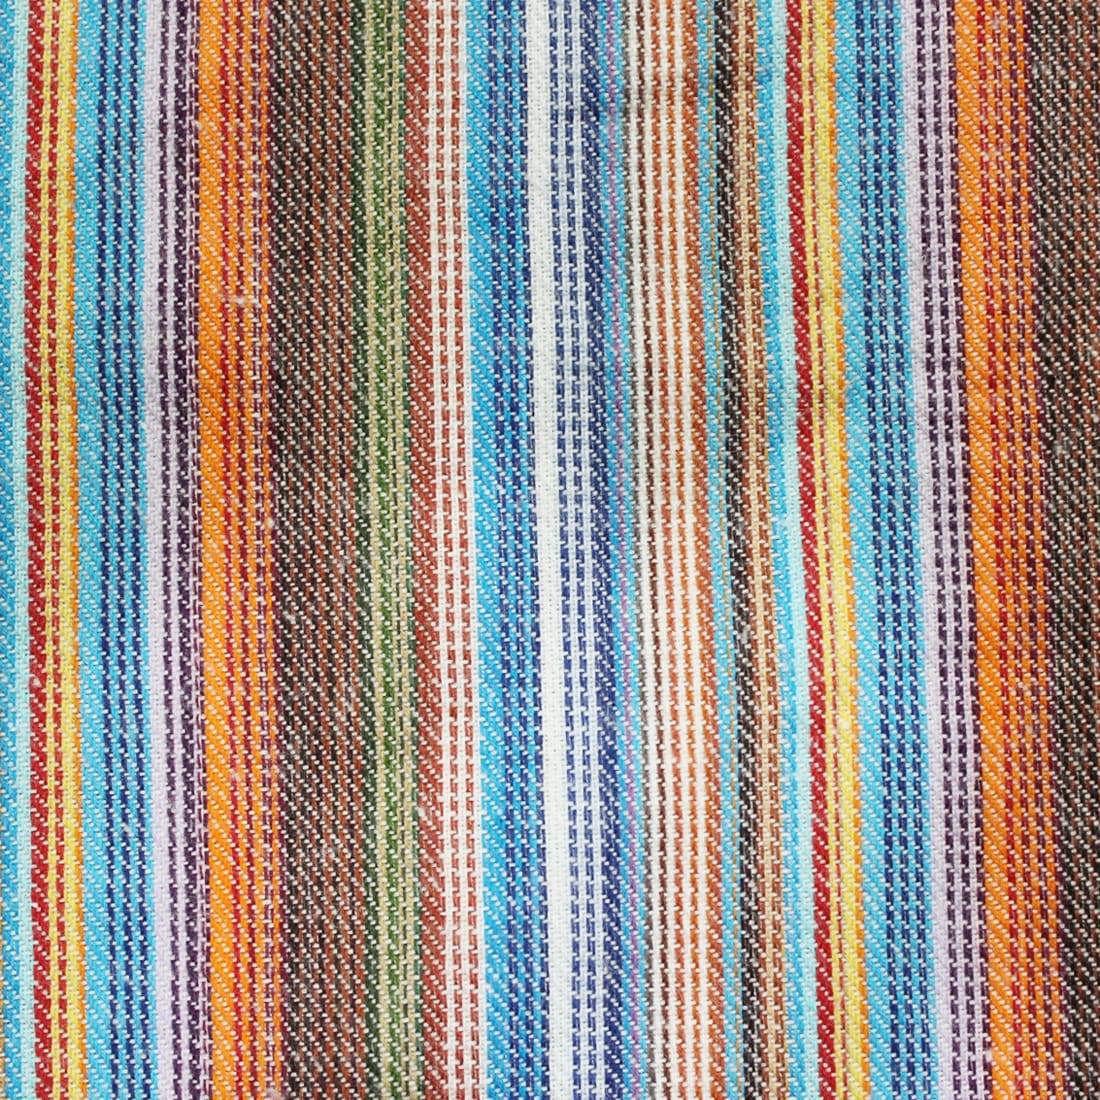 Mercerised Woven Cotton Stripes 6 Pcs Diwan Set - Multicolor